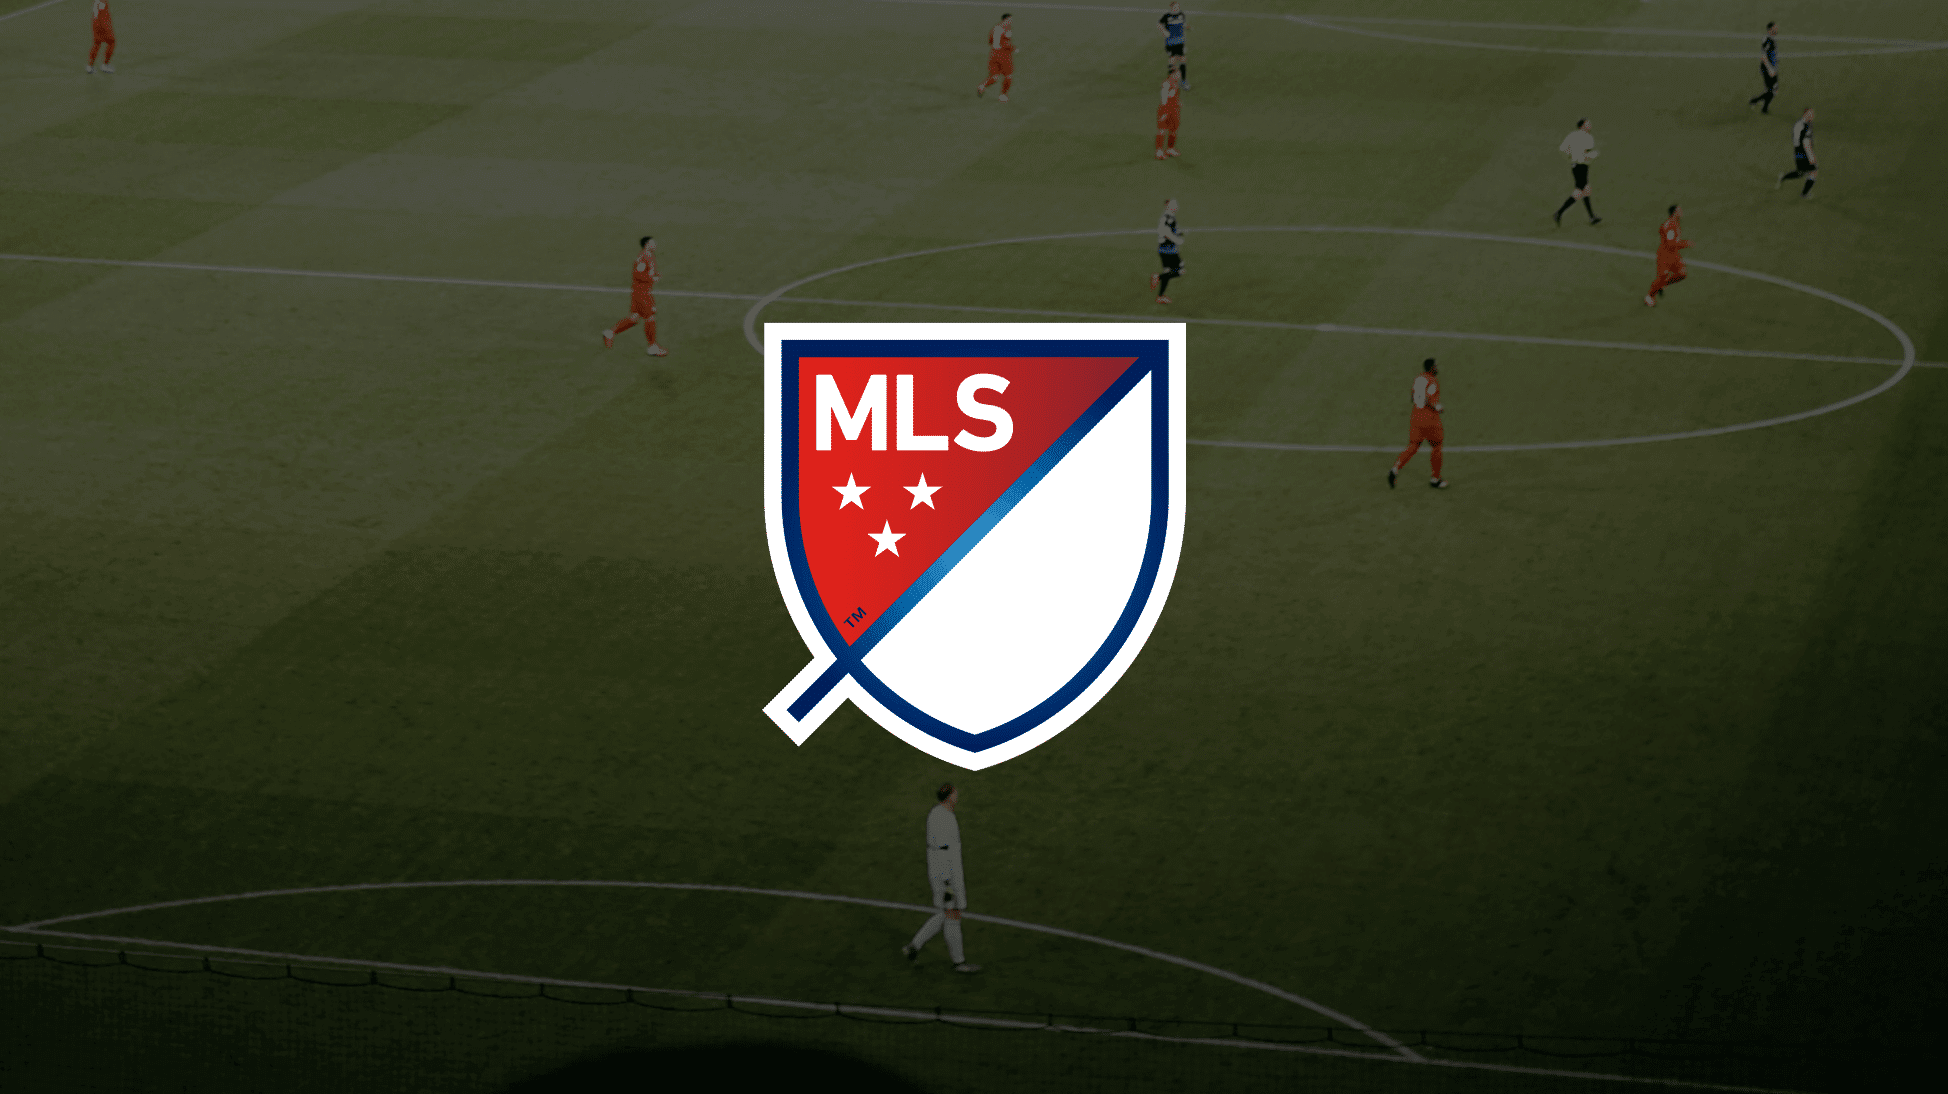 mls logo over soccer field